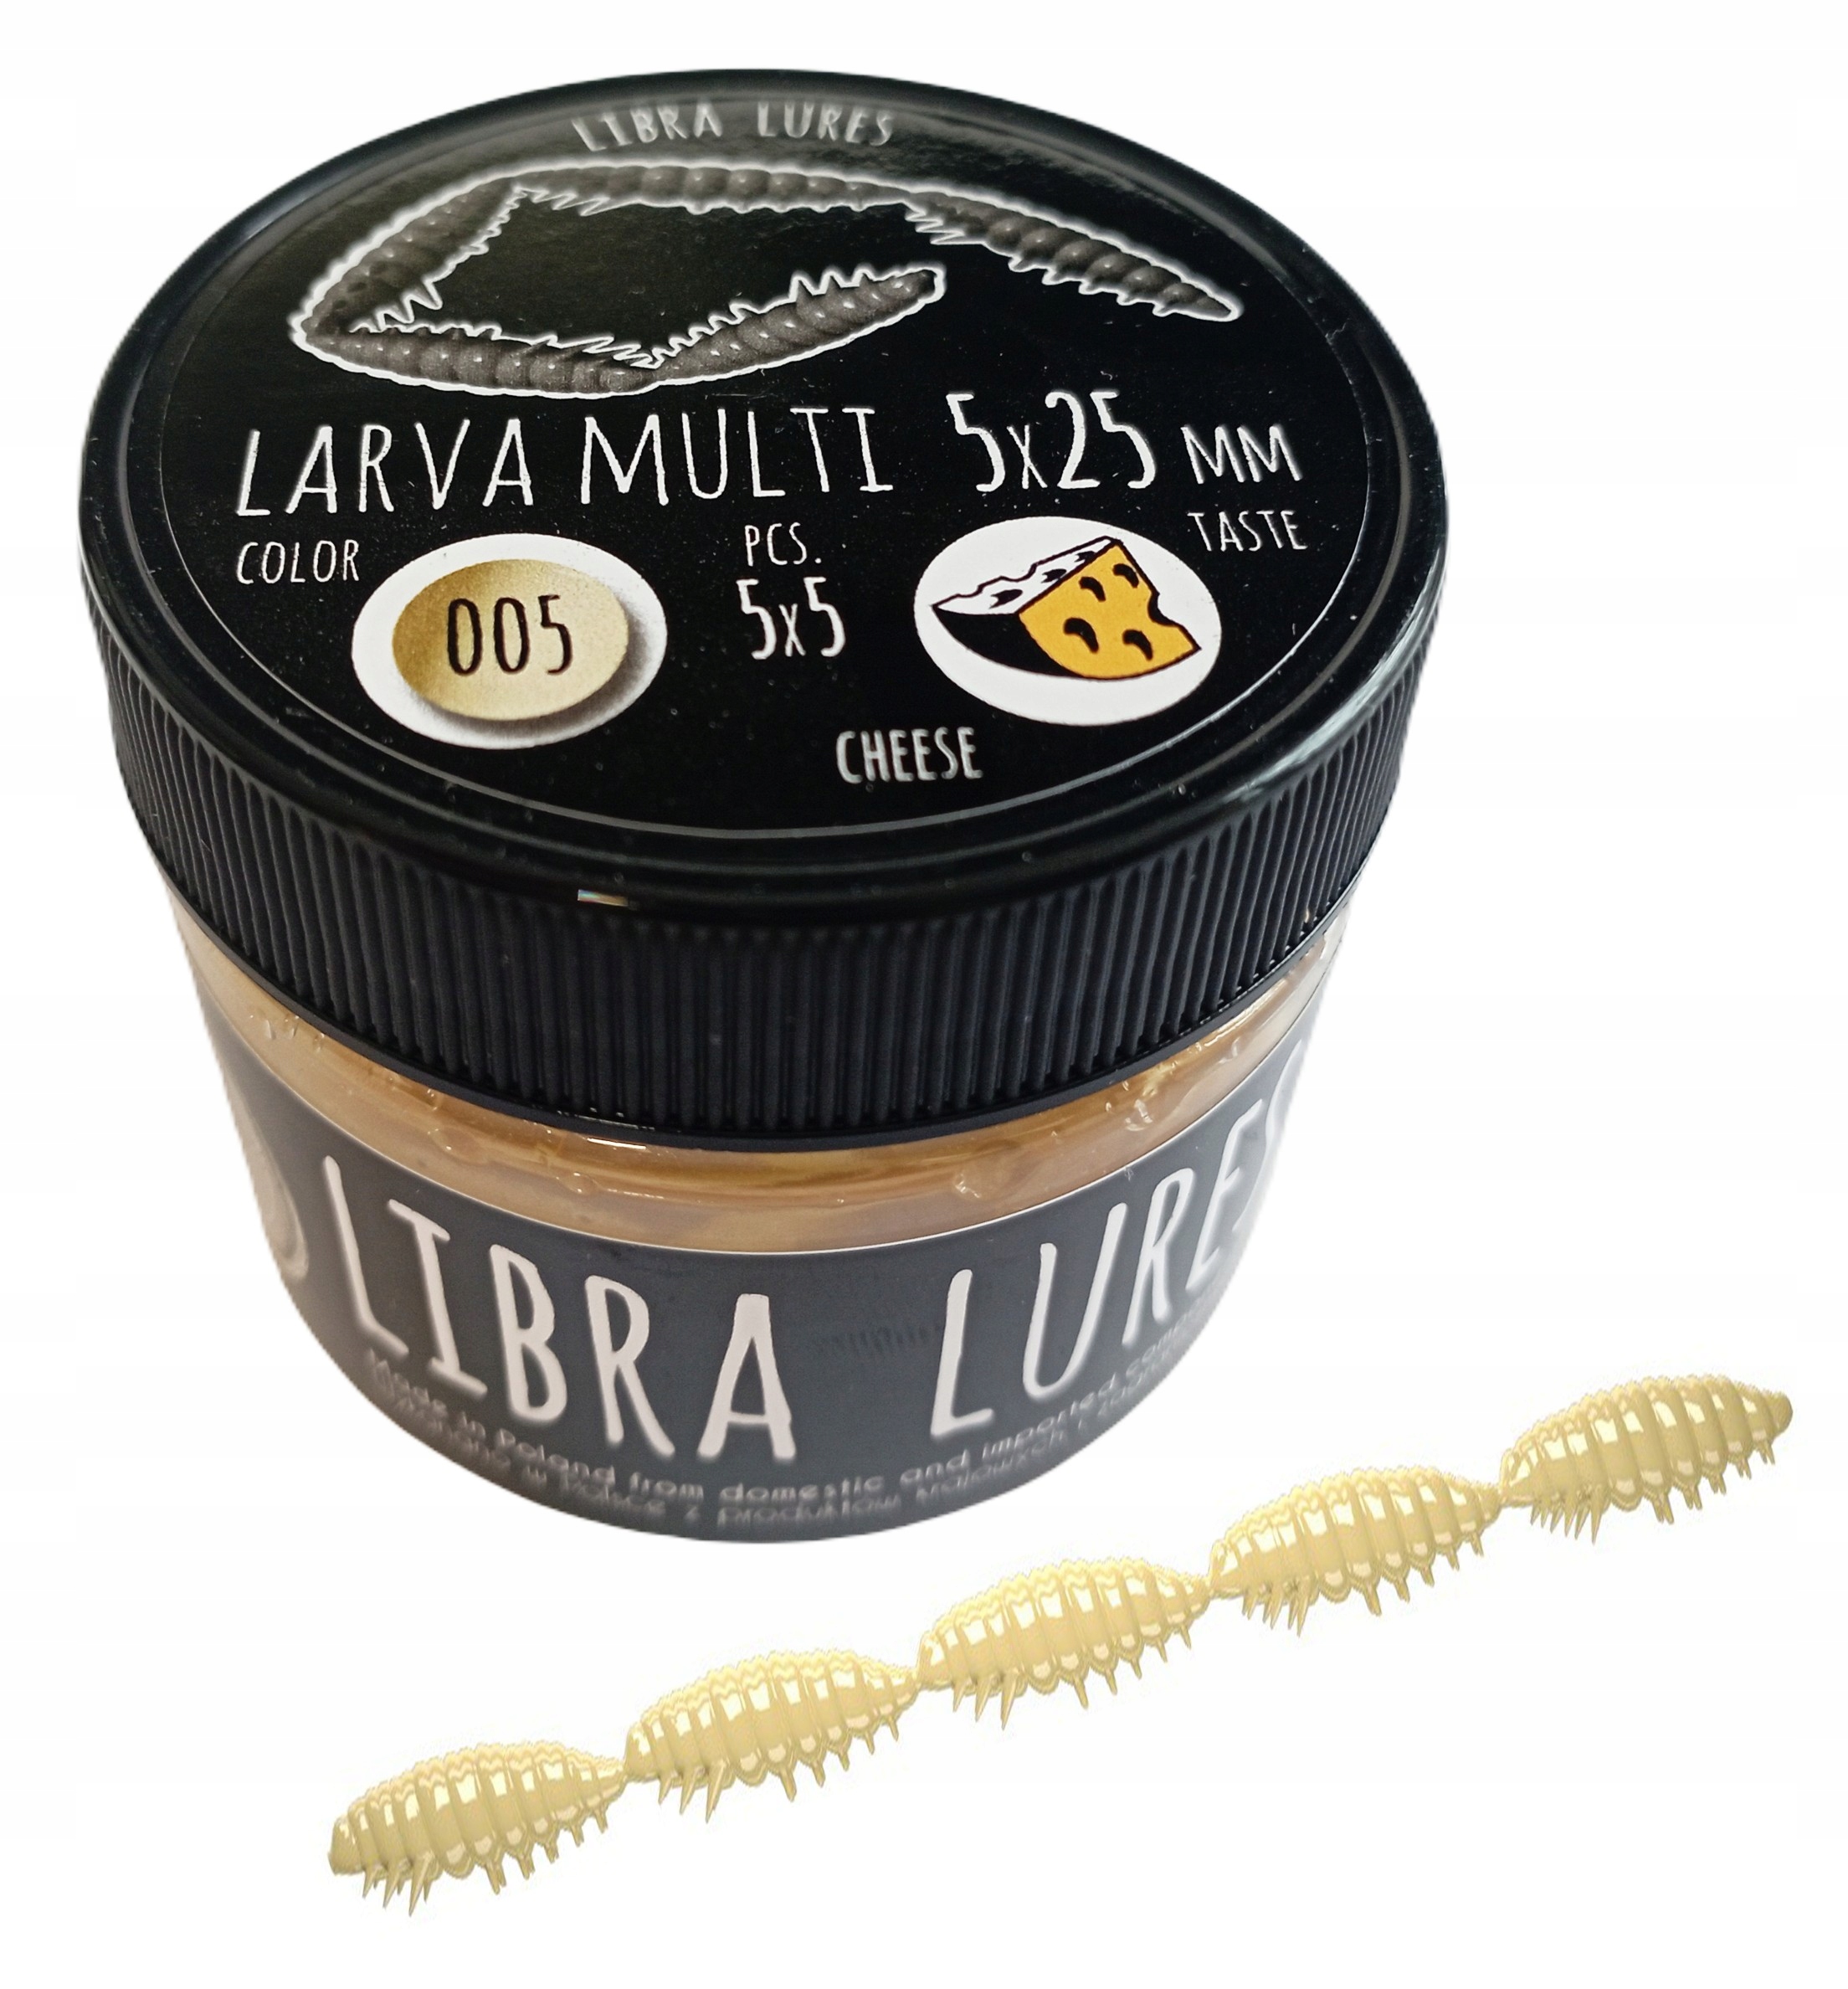 Libra Lures Larva Multi 5x2,5cm 005 Cheese Ser - Larva Multi ser 005 Chees  - 13198419455 